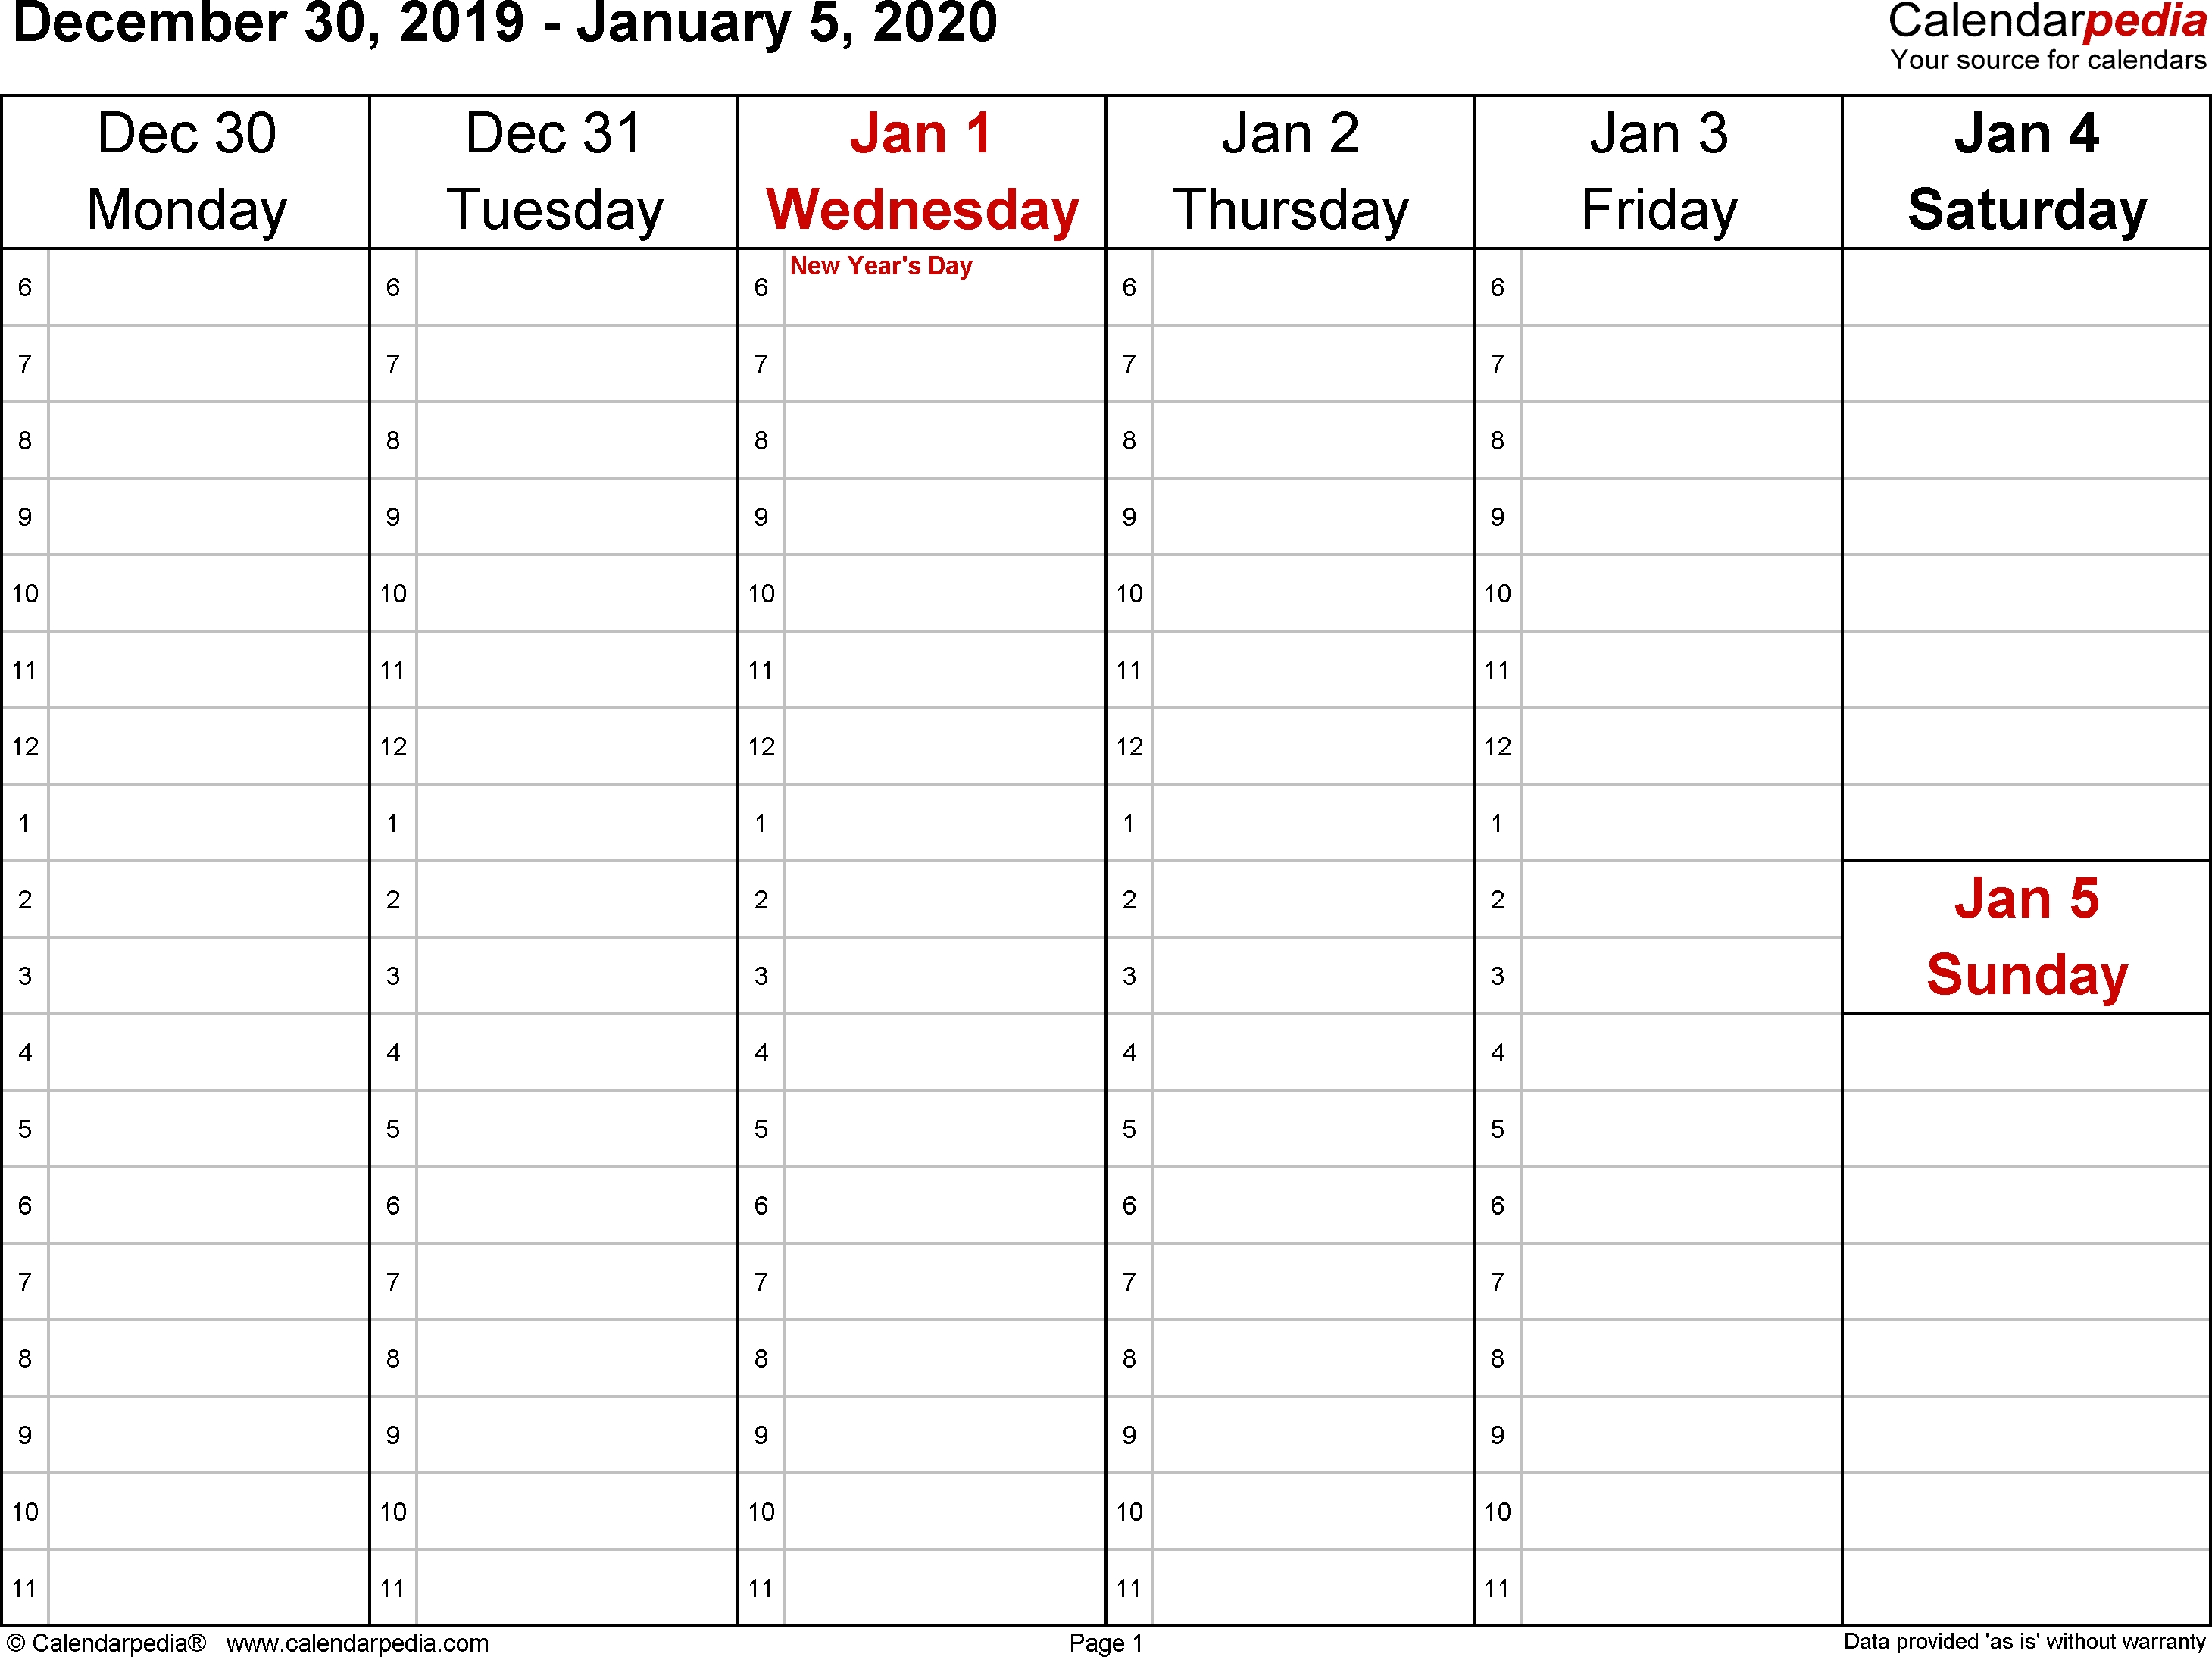 Weekly Calendar 2020 For Word - 12 Free Printable Templates-Weekly Calendar 2020 Template Students 7 Days A Week